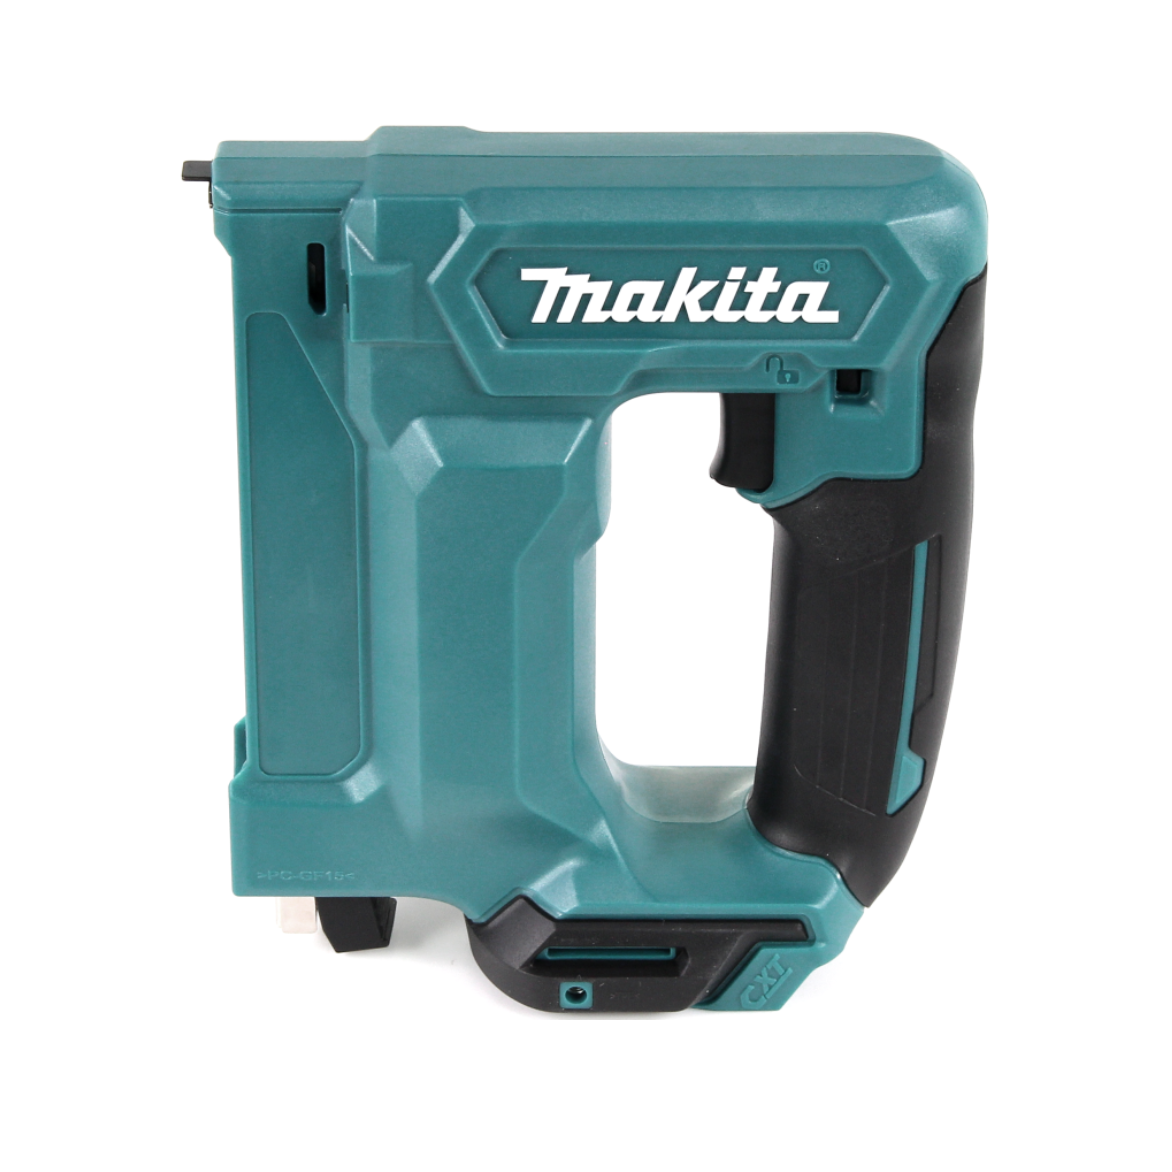 Makita ST 113 DSMJ Agrafeuse ultra maniable sans fil, 10,8V Li-Ion + Coffret de transport Makpac 2 + 1x Batterie 4,0Ah + Chargeur 1